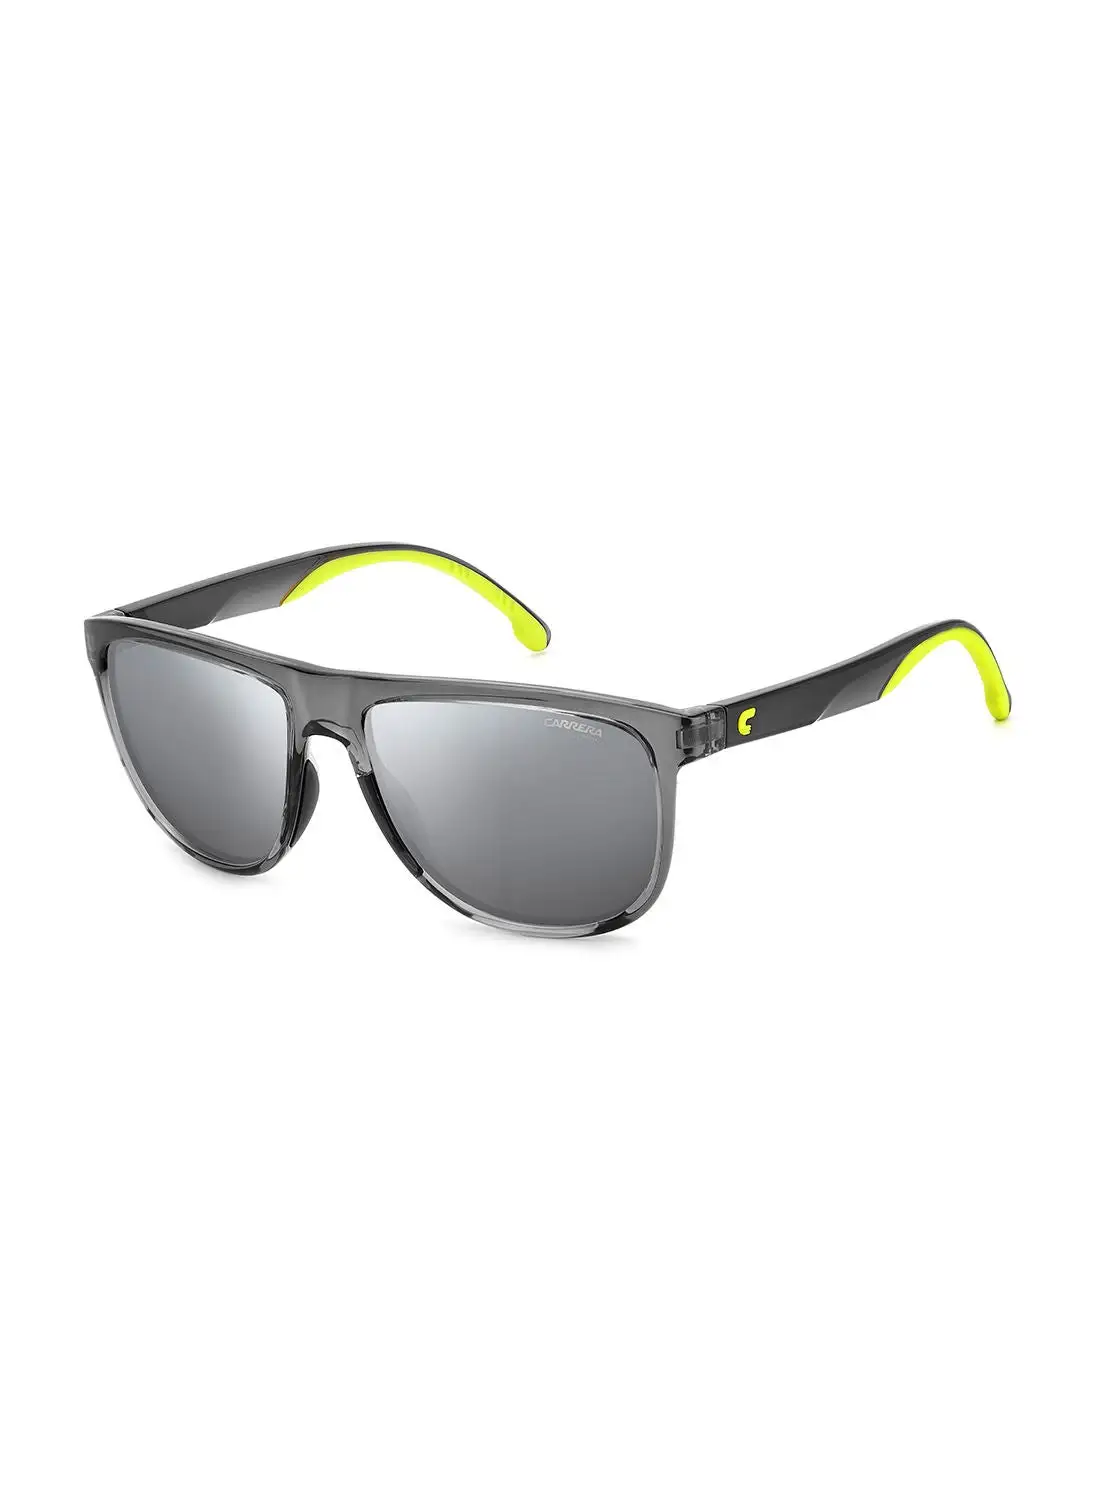 Carrera Men's UV Protection Sunglasses - Carrera 8059/S Grey/Green 58 - Lens Size: 58 Mm